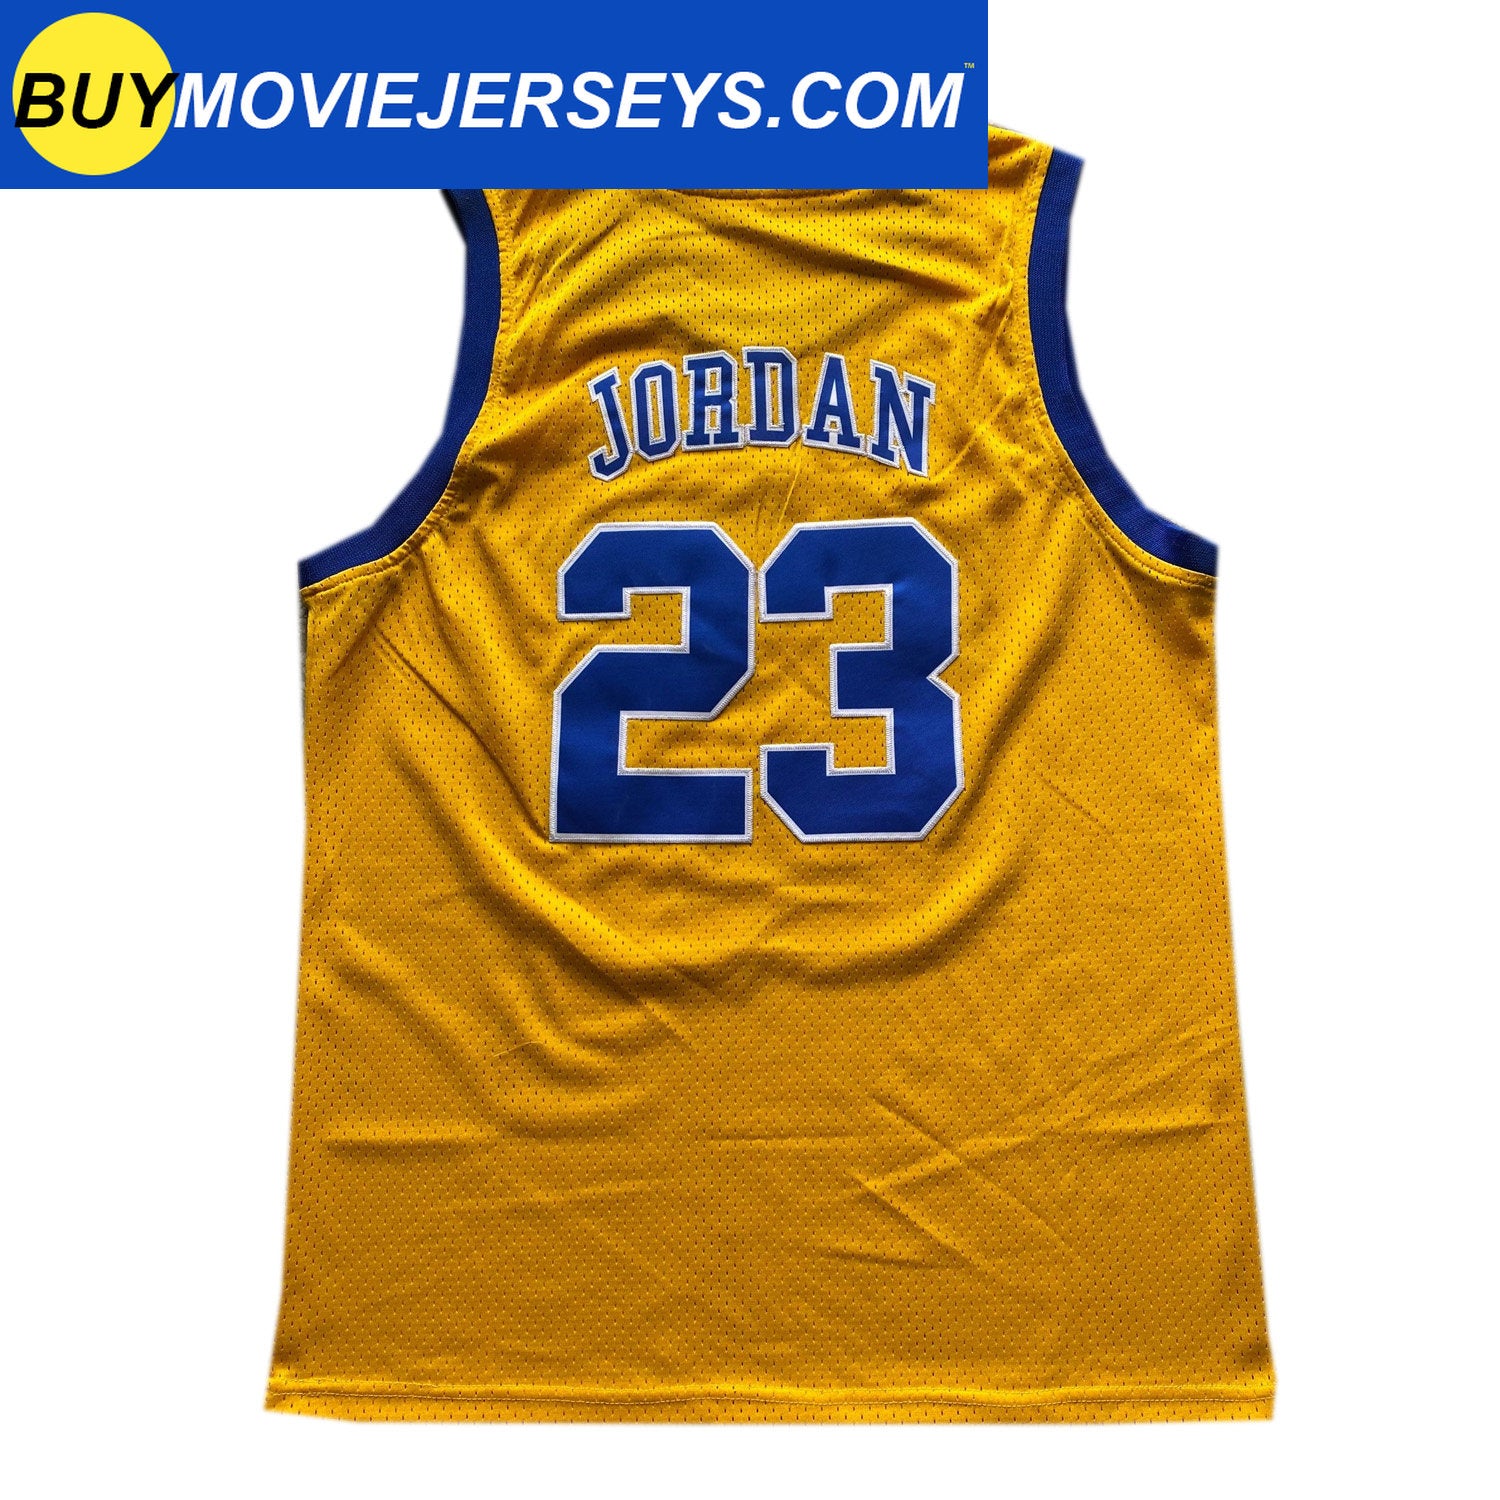 Laney High School Blue #23 Jordan Throwback Basketball Jersey Yellow